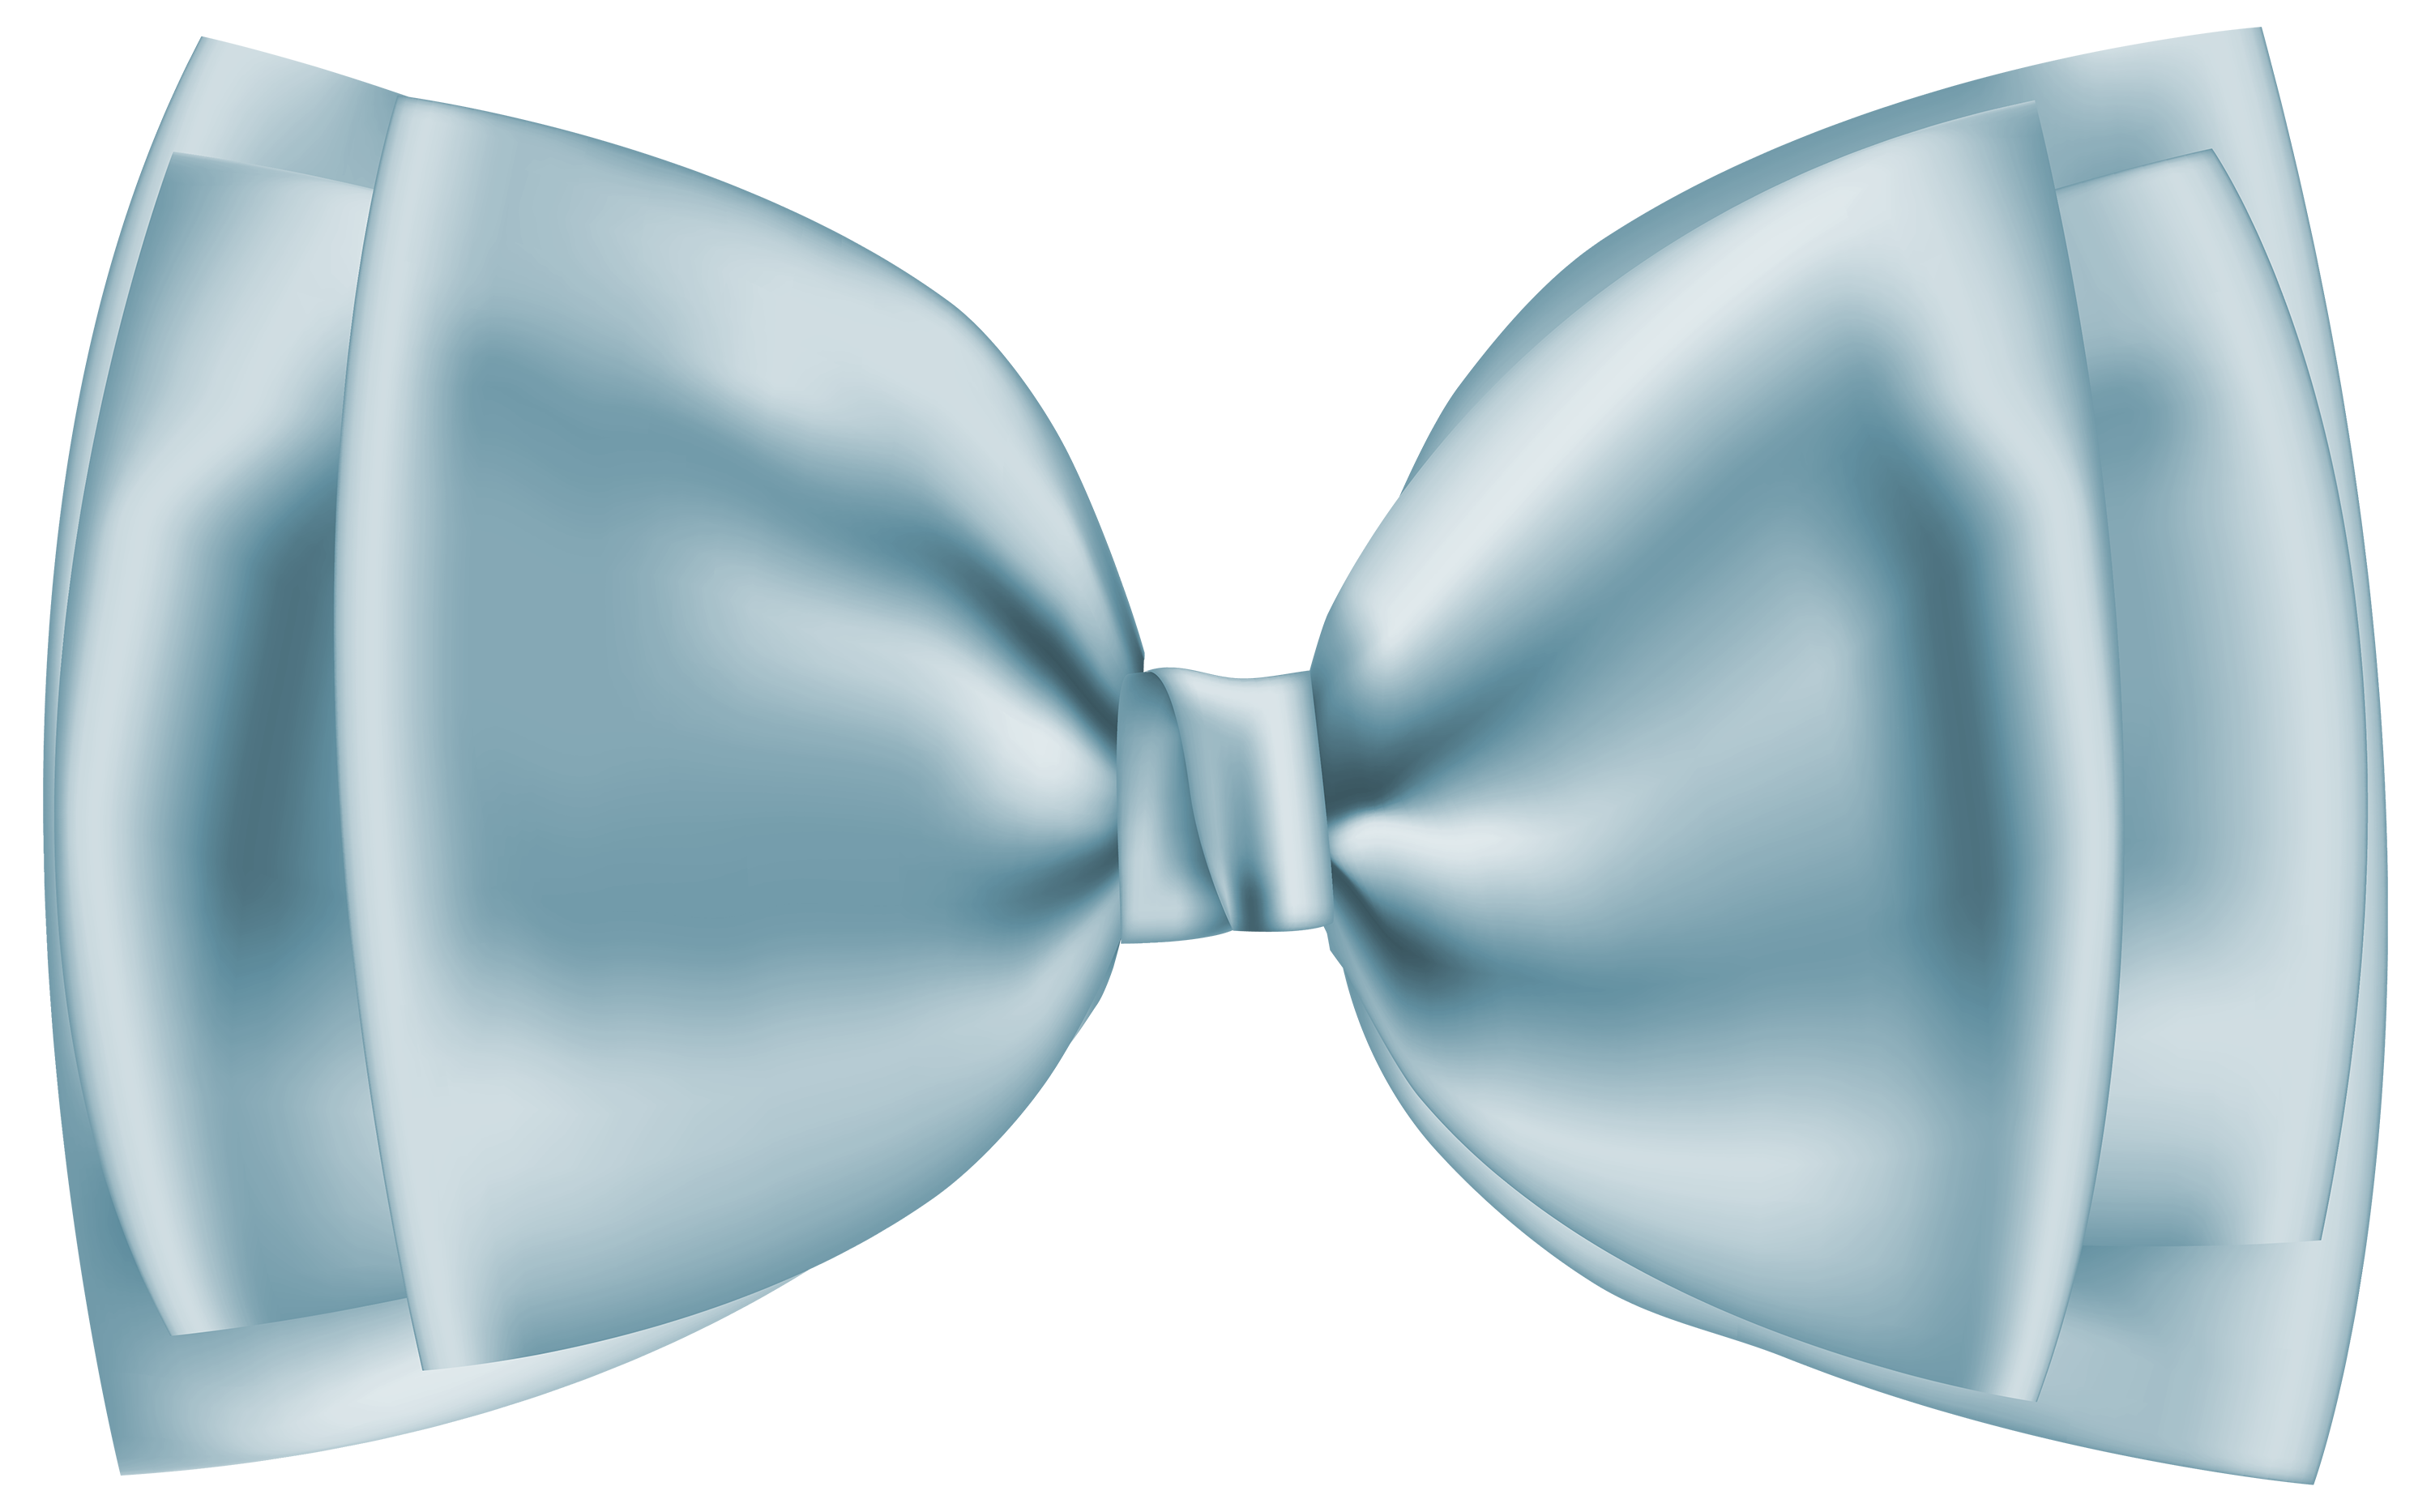 The light blue ribbon Stock Vector